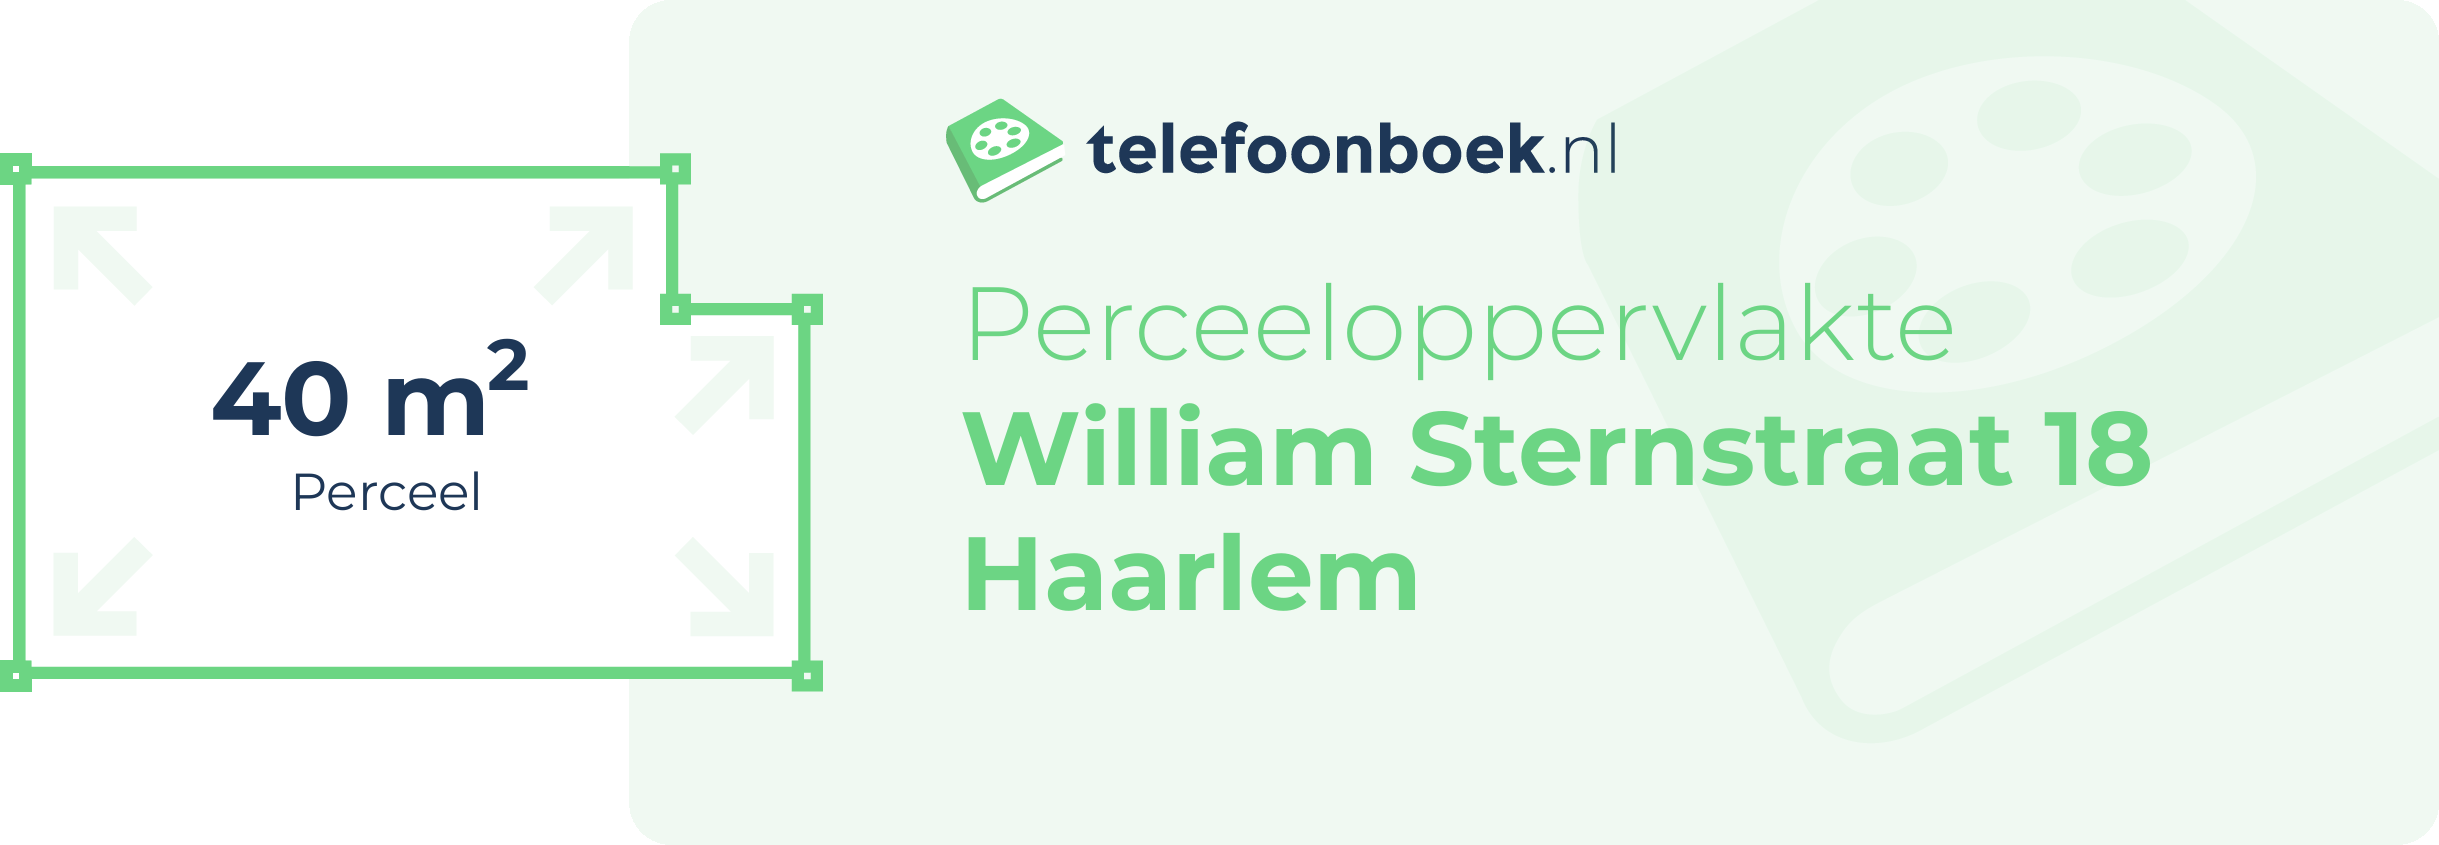 Perceeloppervlakte William Sternstraat 18 Haarlem